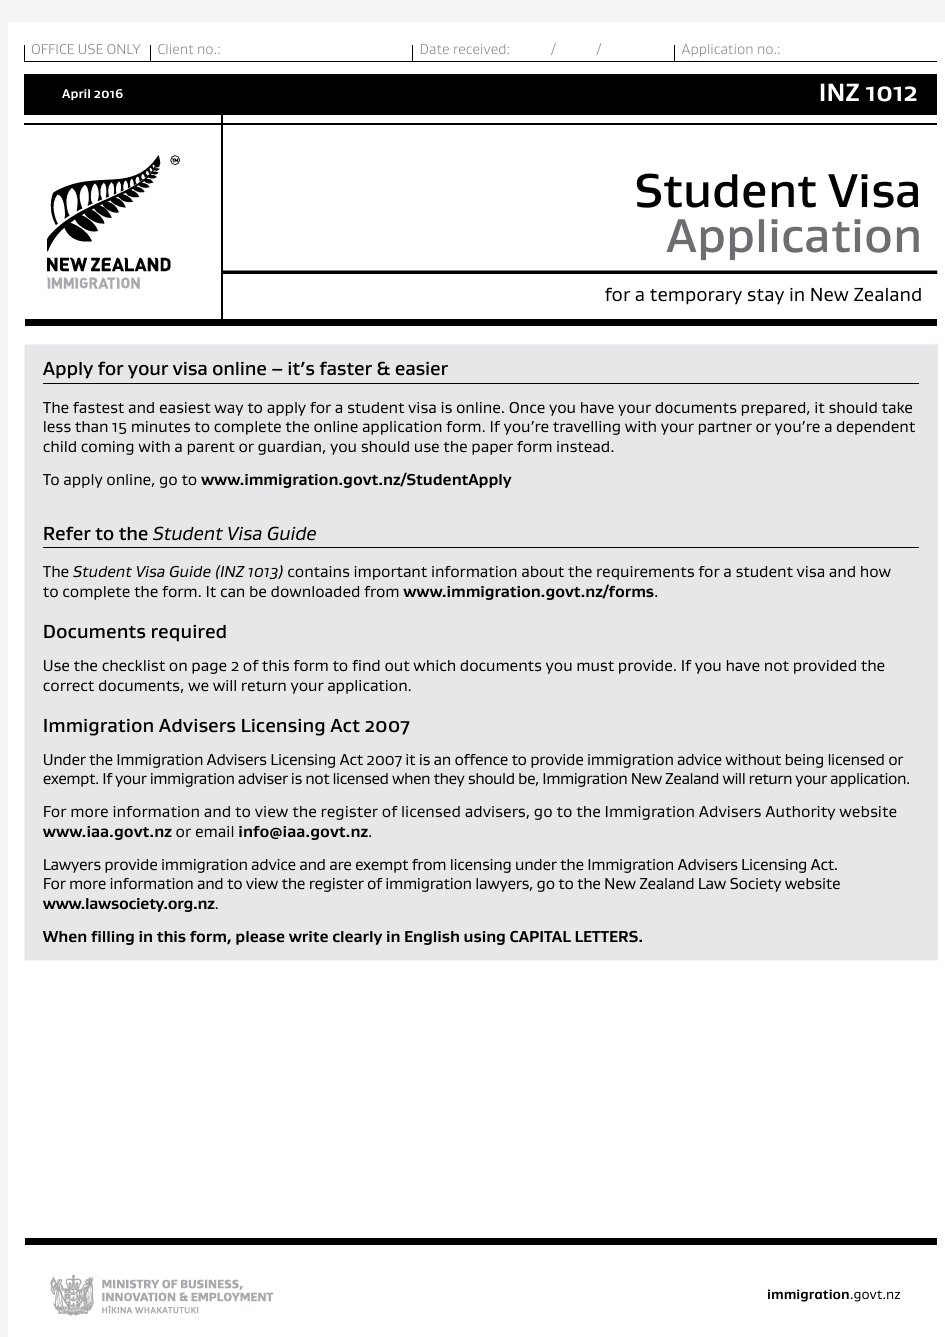 Student Visa application form - INZ 1012 - 中文参照